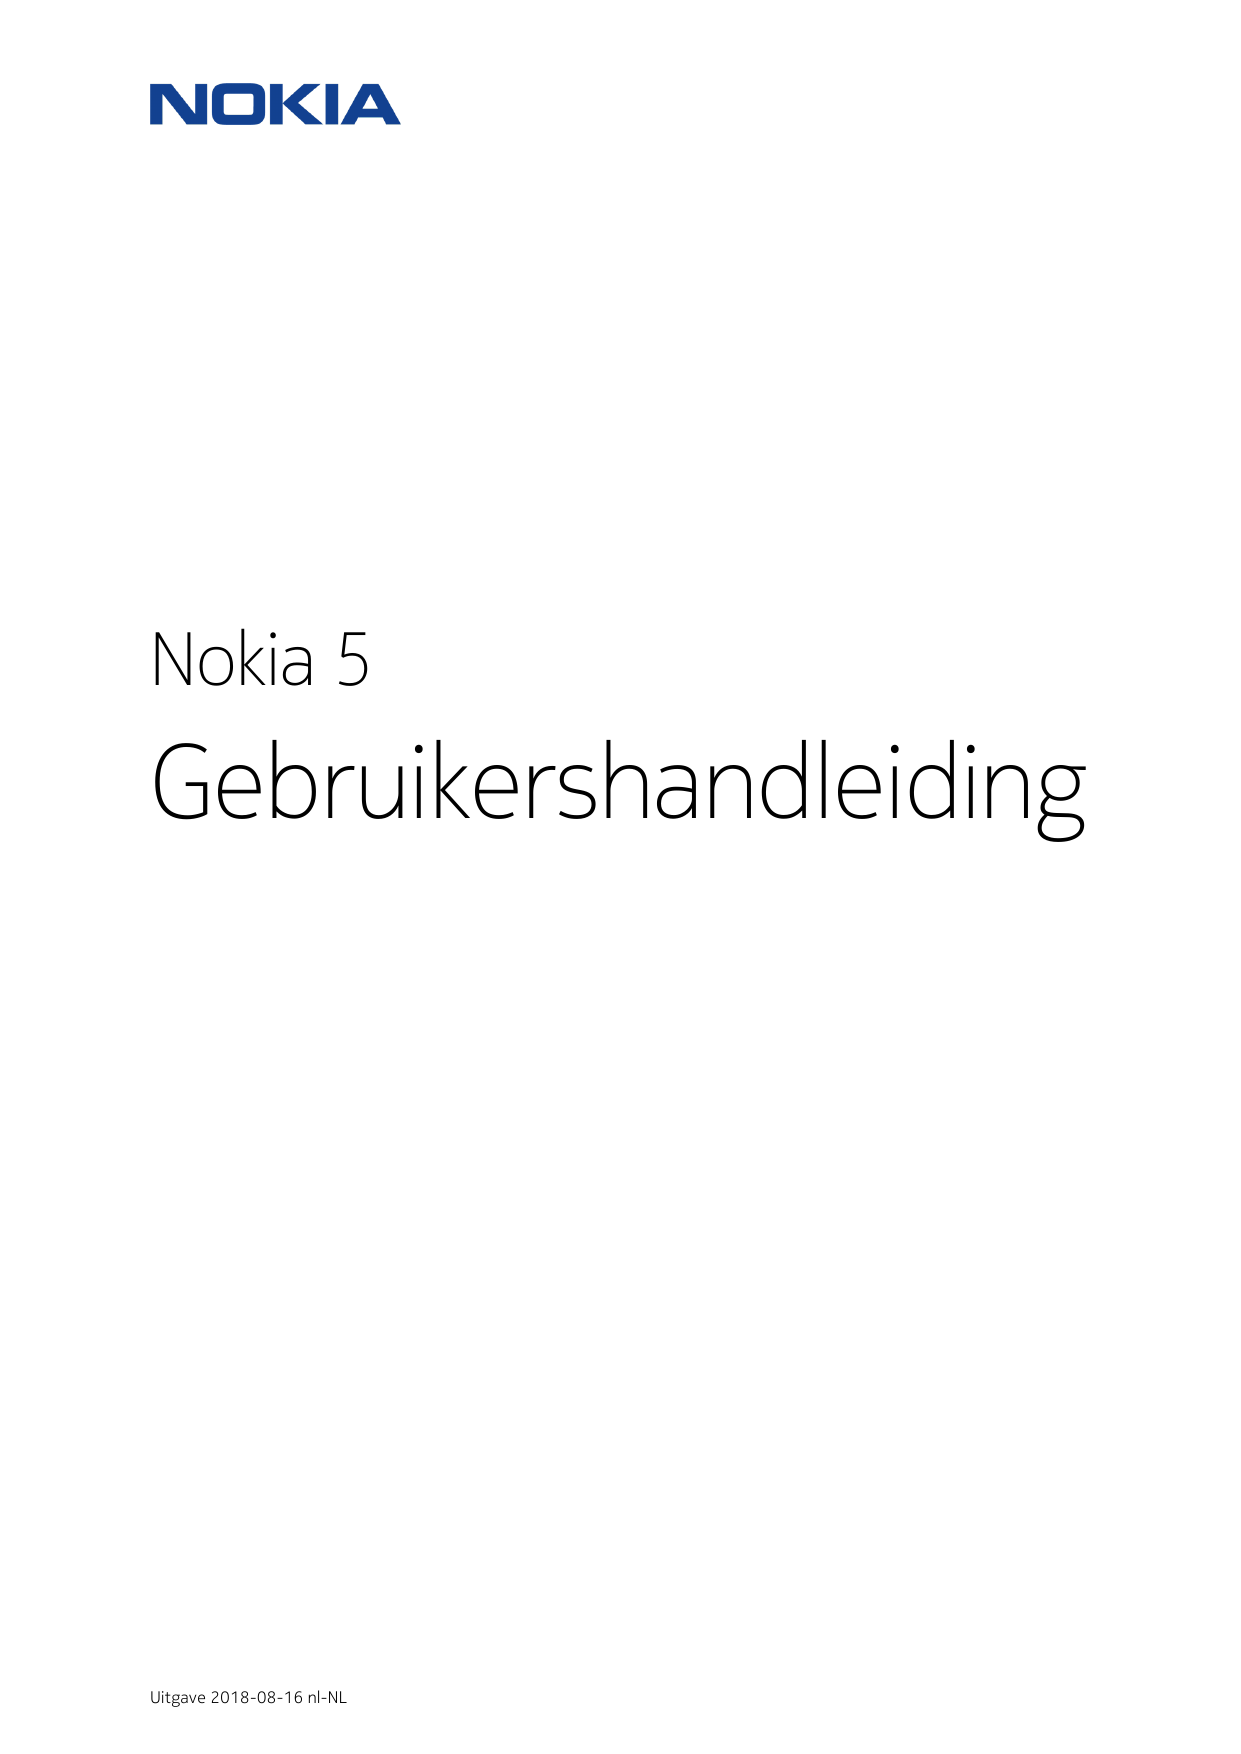 Nokia 5GebruikershandleidingUitgave 2018-08-16 nl-NL